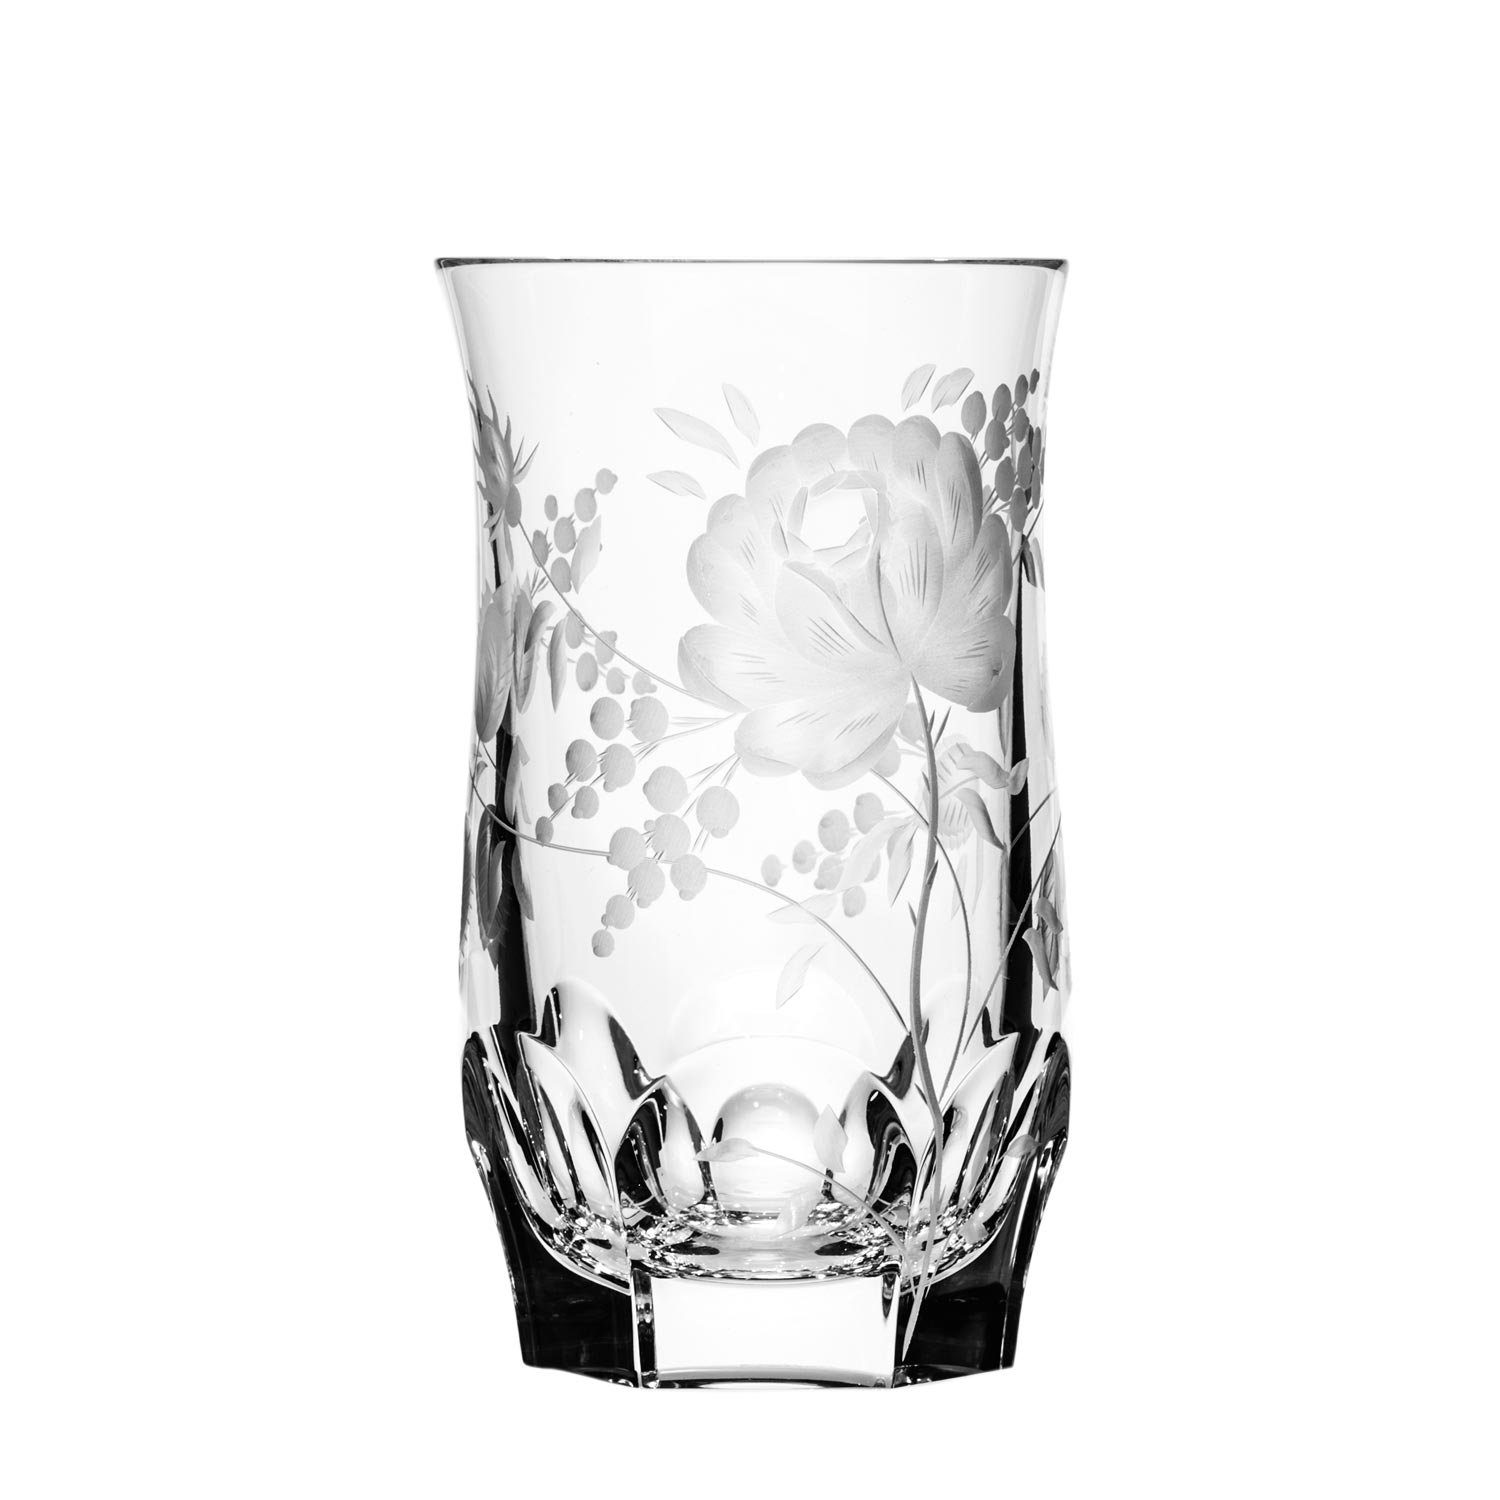 ARNSTADT KRISTALL Longdrinkglas Primerose clear (12,7 cm) - Kristallglas mundgeblasen · handgeschliffe, Kristallglas